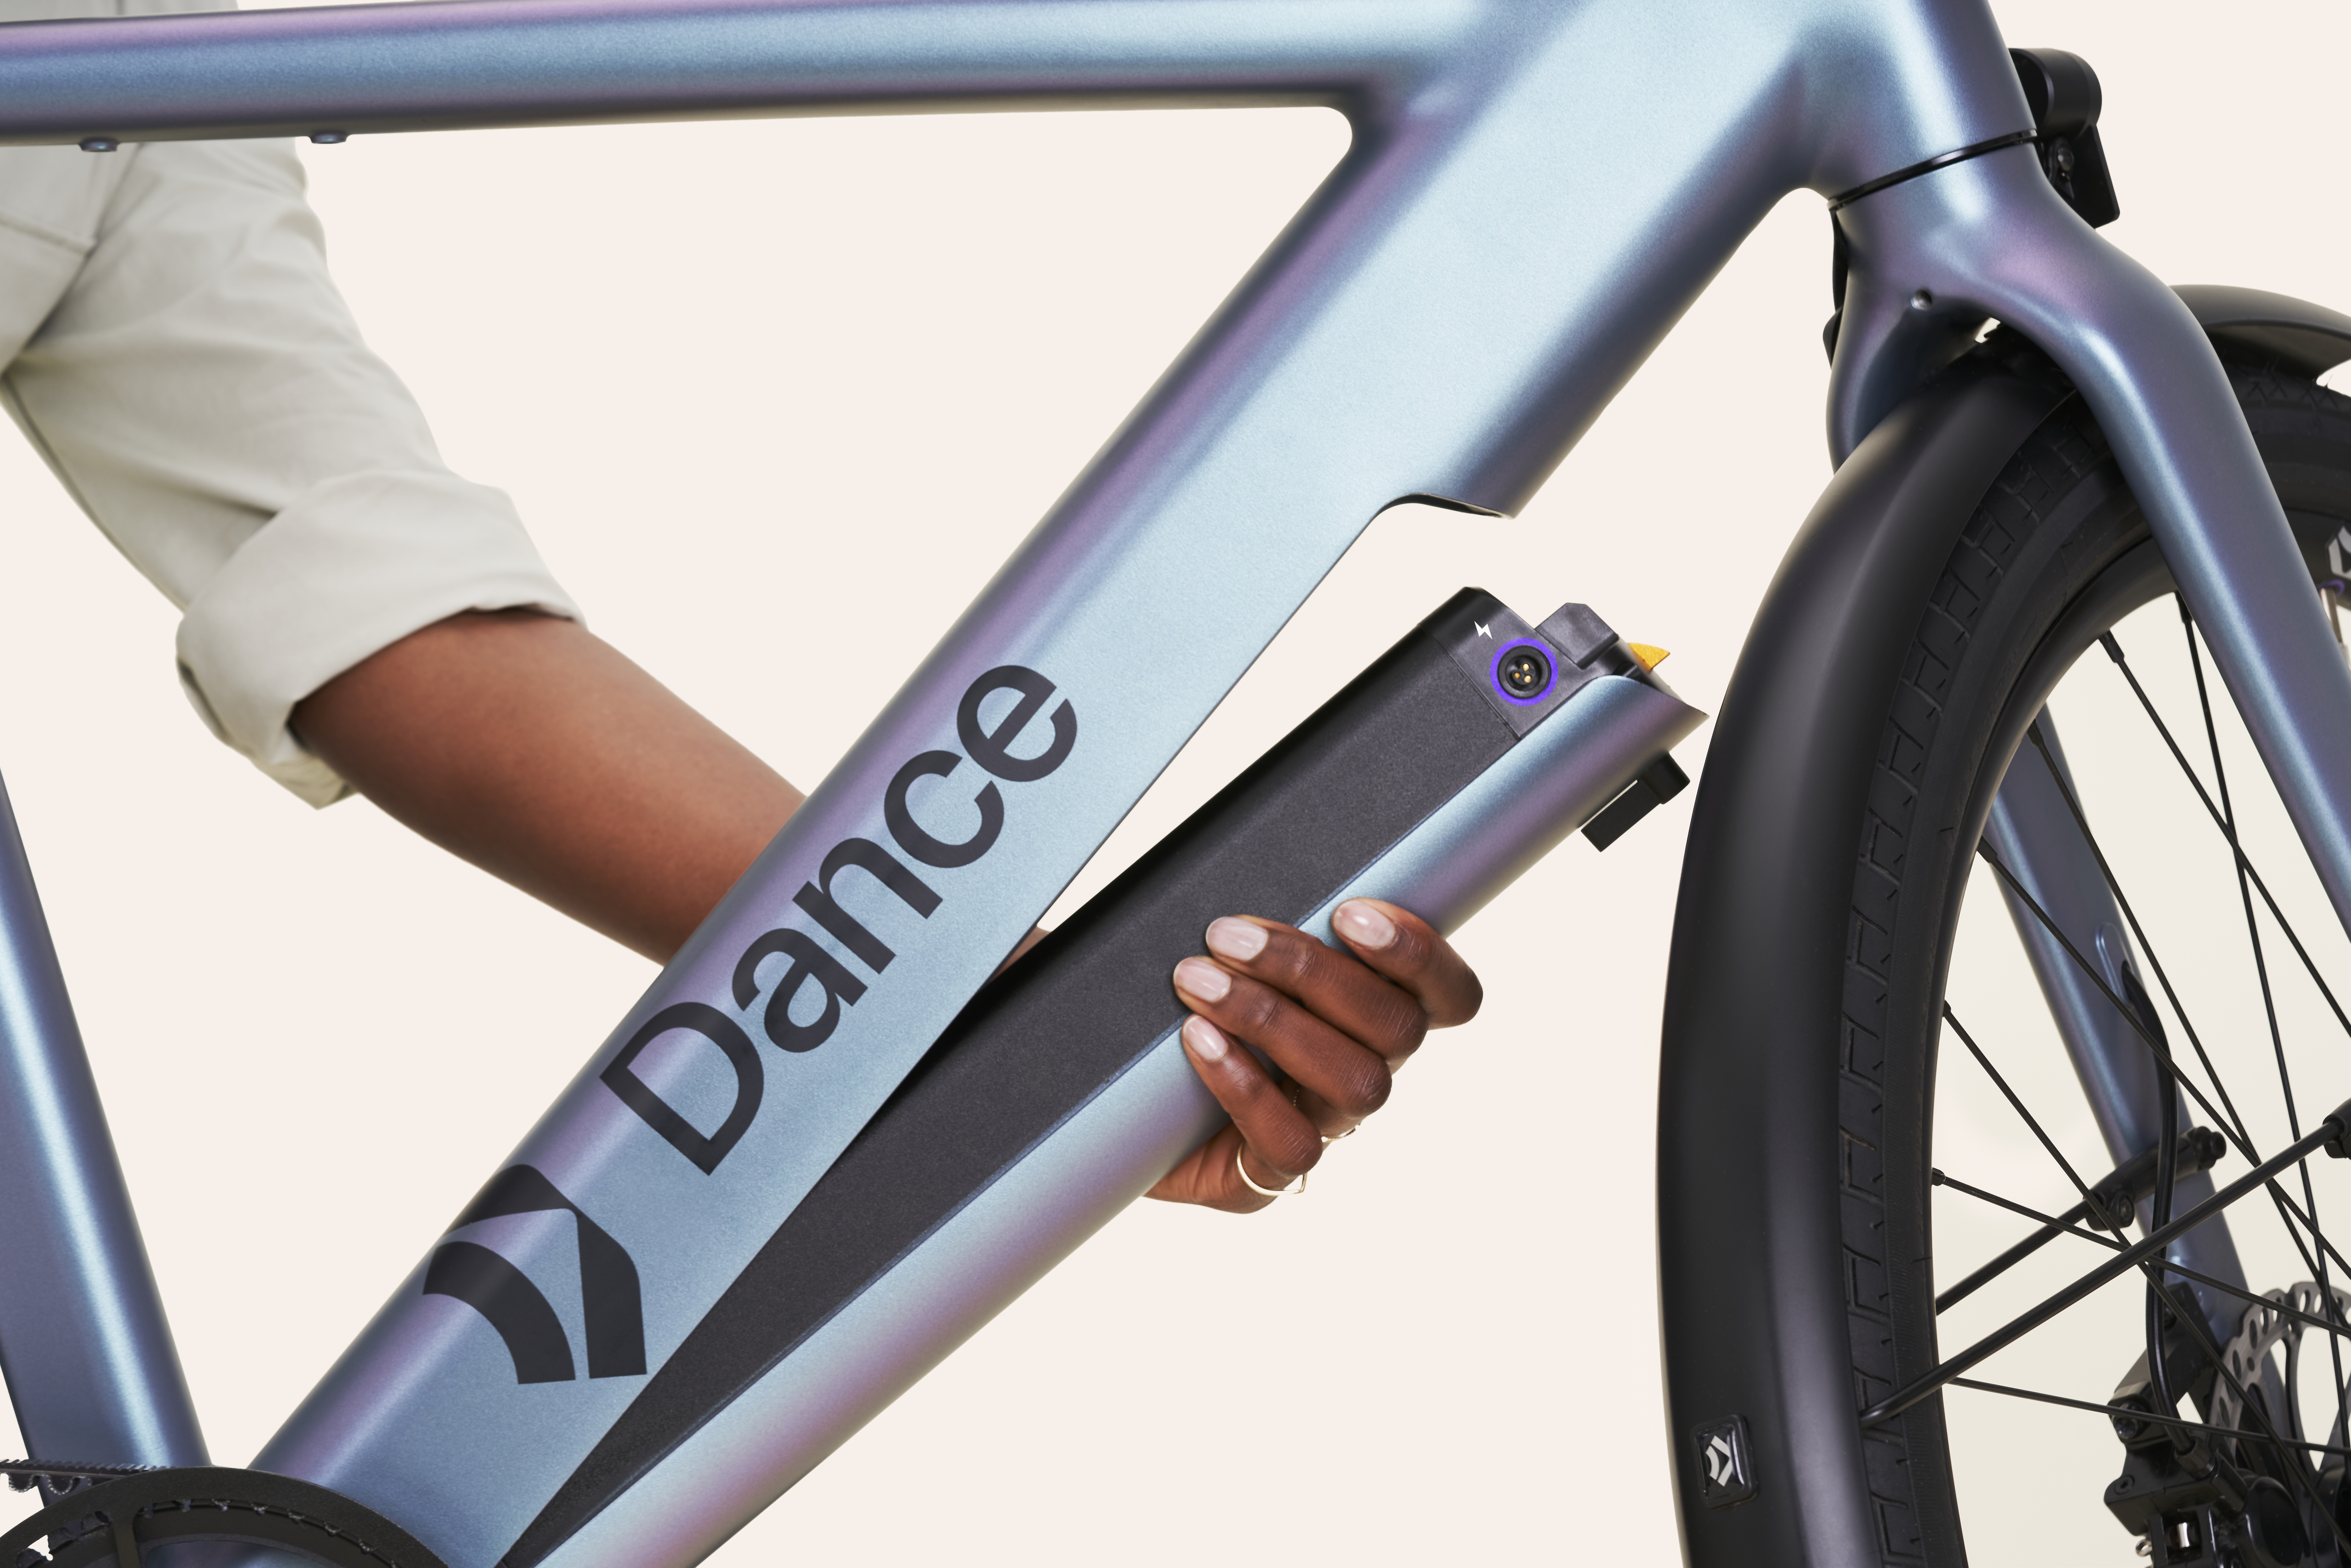 Dance raises another $19.4 million for its e-bike subscription service – ProWellTech 2